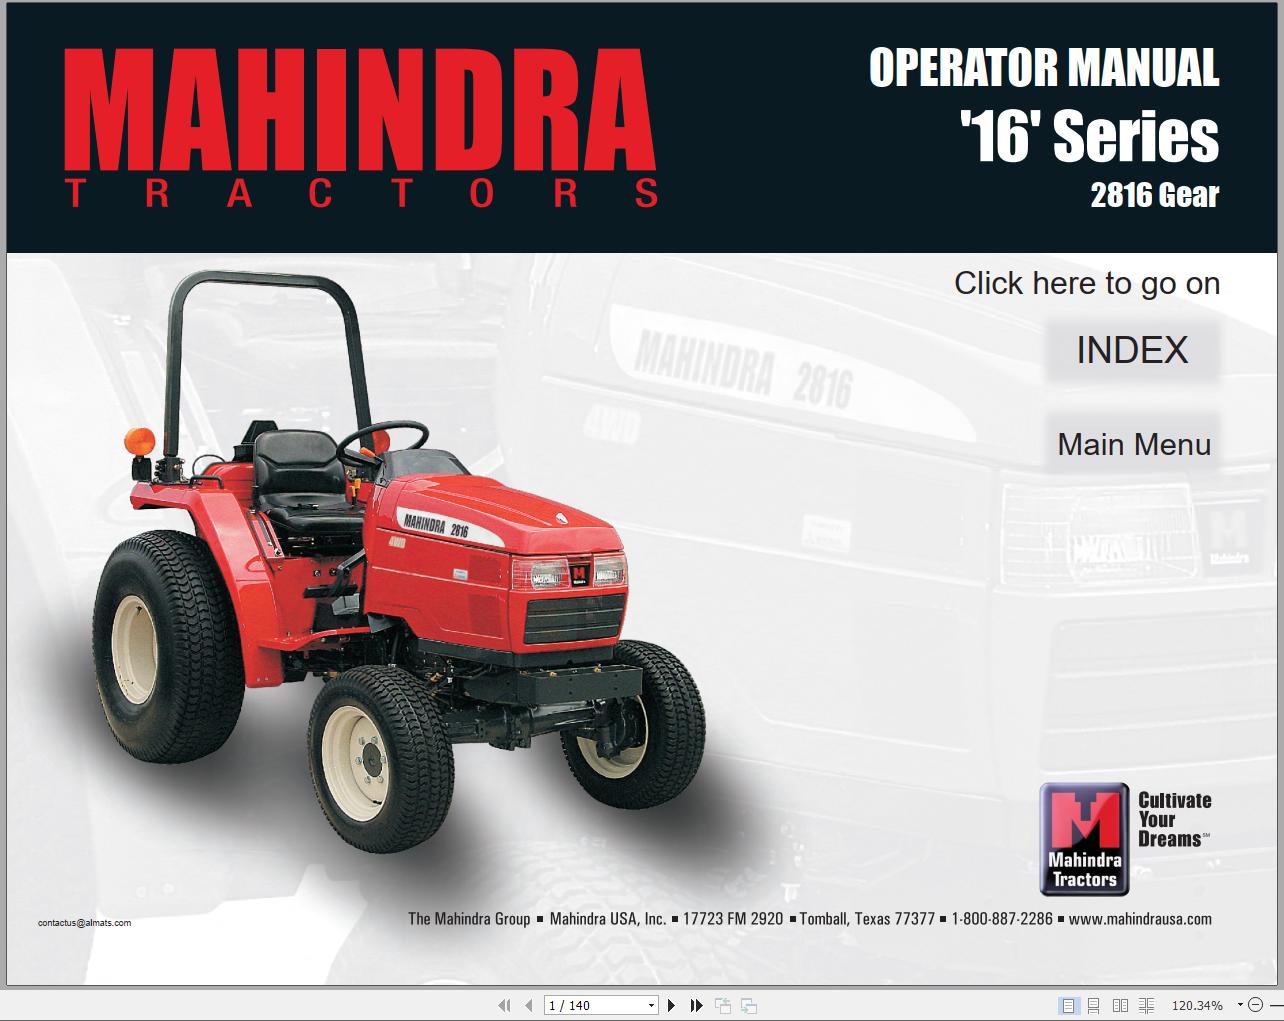 Mahindra Tractor 16 Series 2816 Gear Full Operator Manual Fast Download